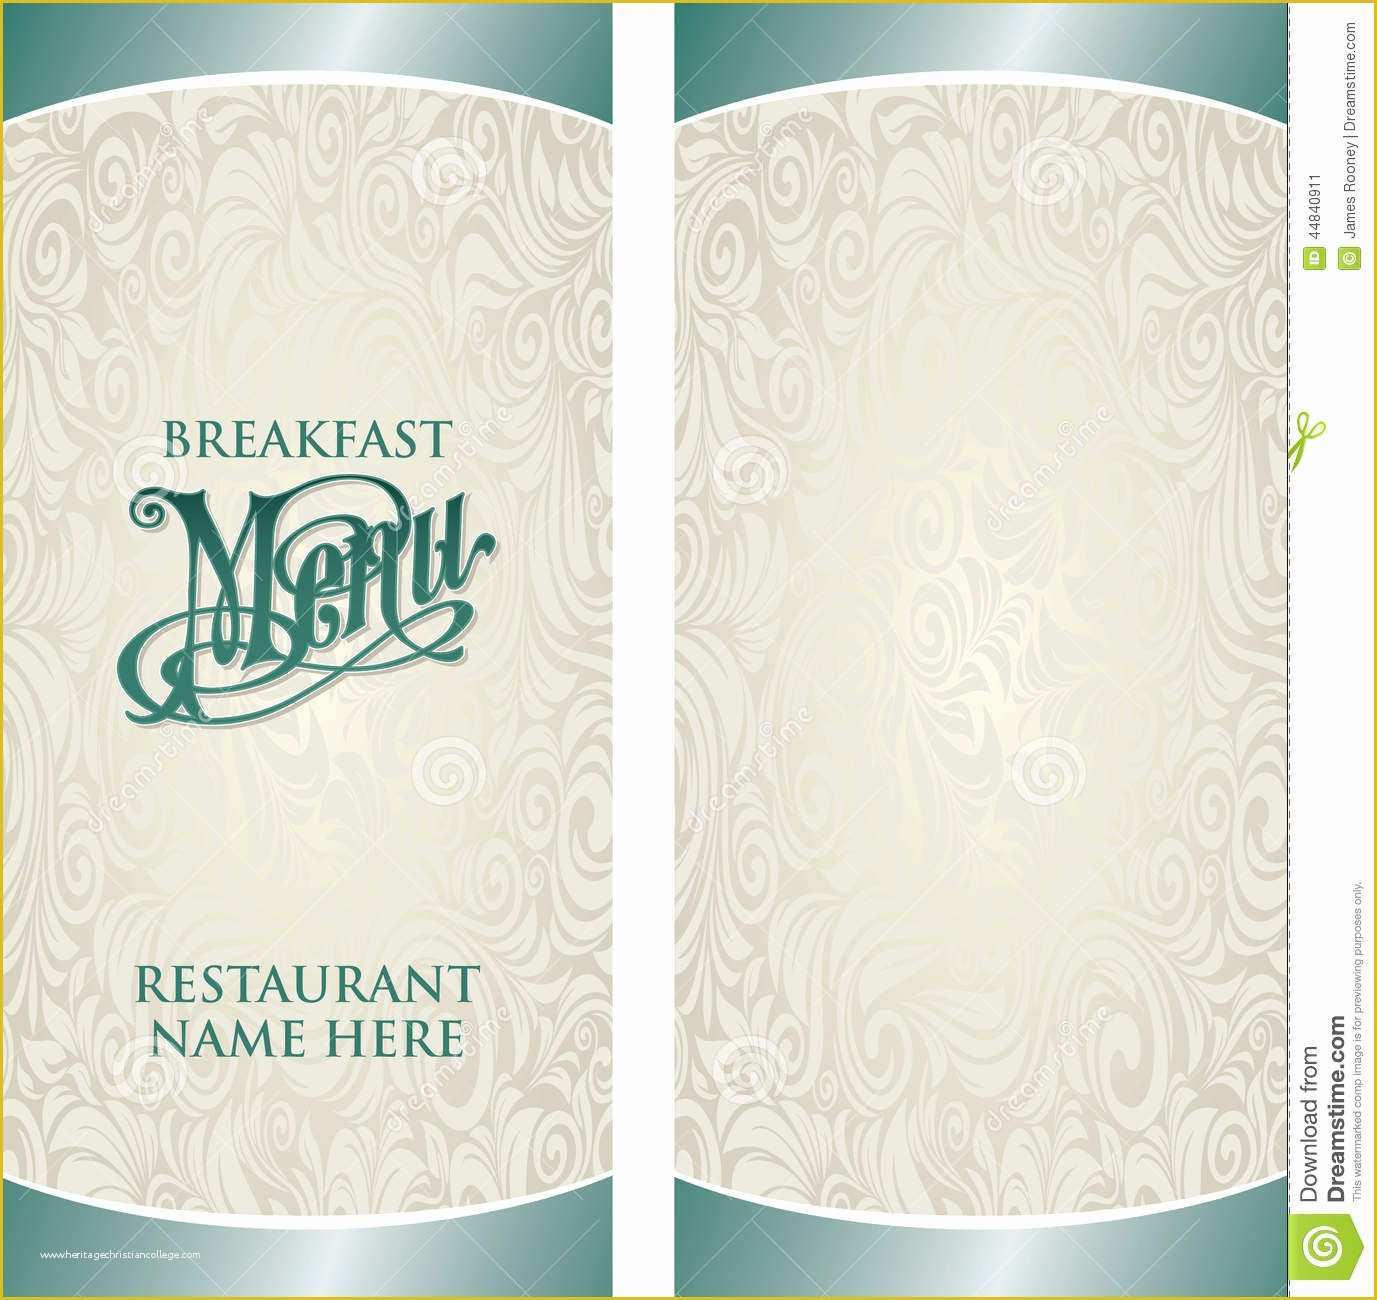 Breakfast Menu Template Free Download Of Menu Template Stock Vector Illustration Of Elegant